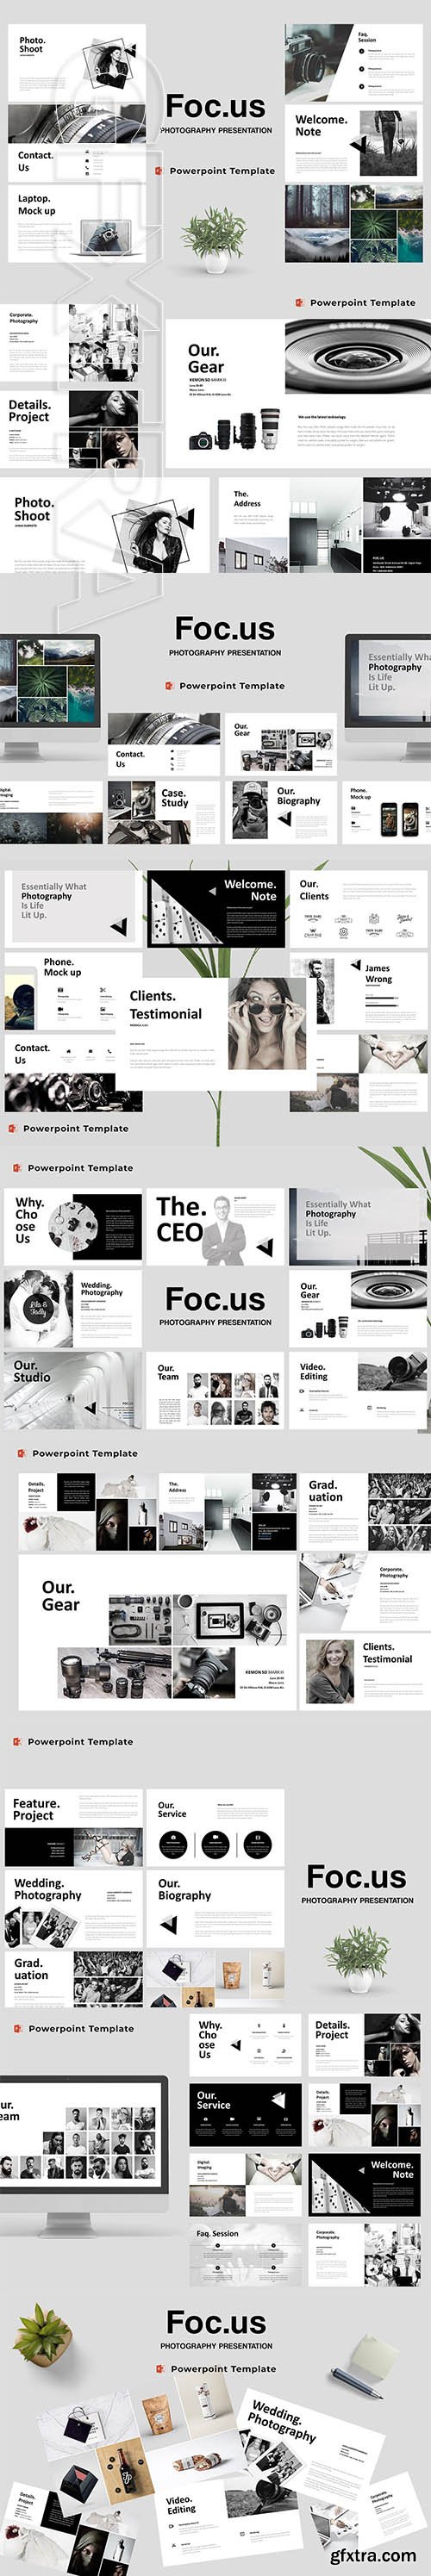 CreativeMarket - Focus - Powerpoint Template 3751896